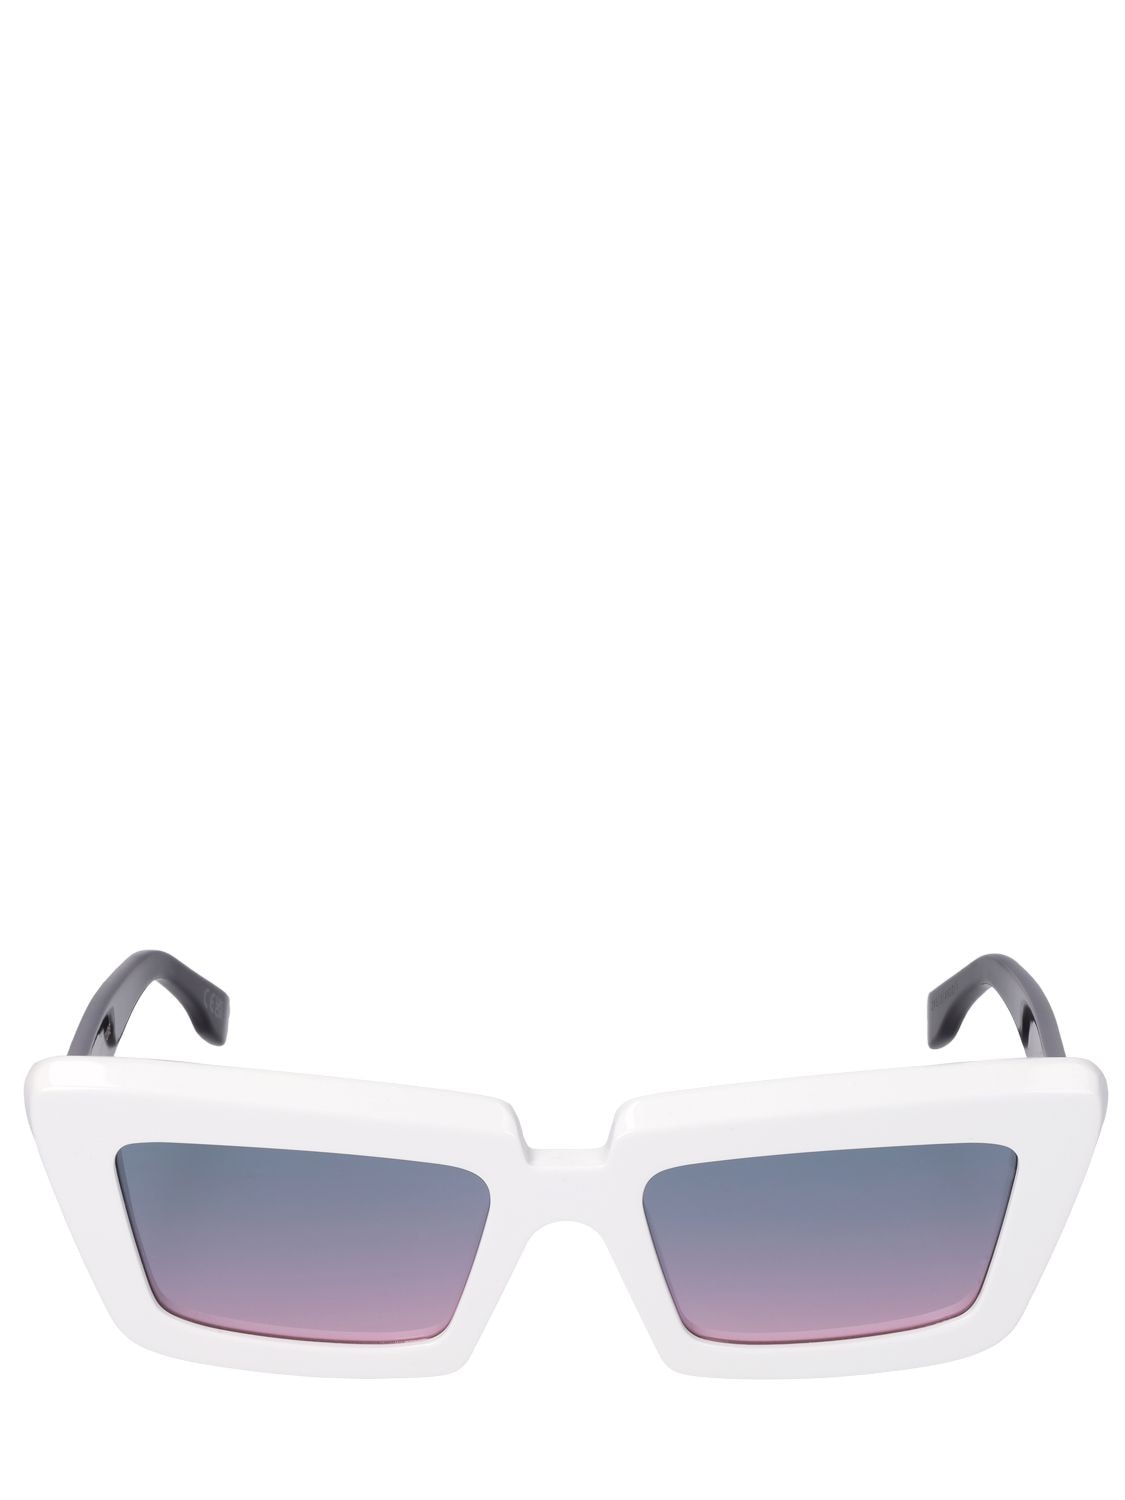 Image of Coccodrillo Acetate Sunglasses